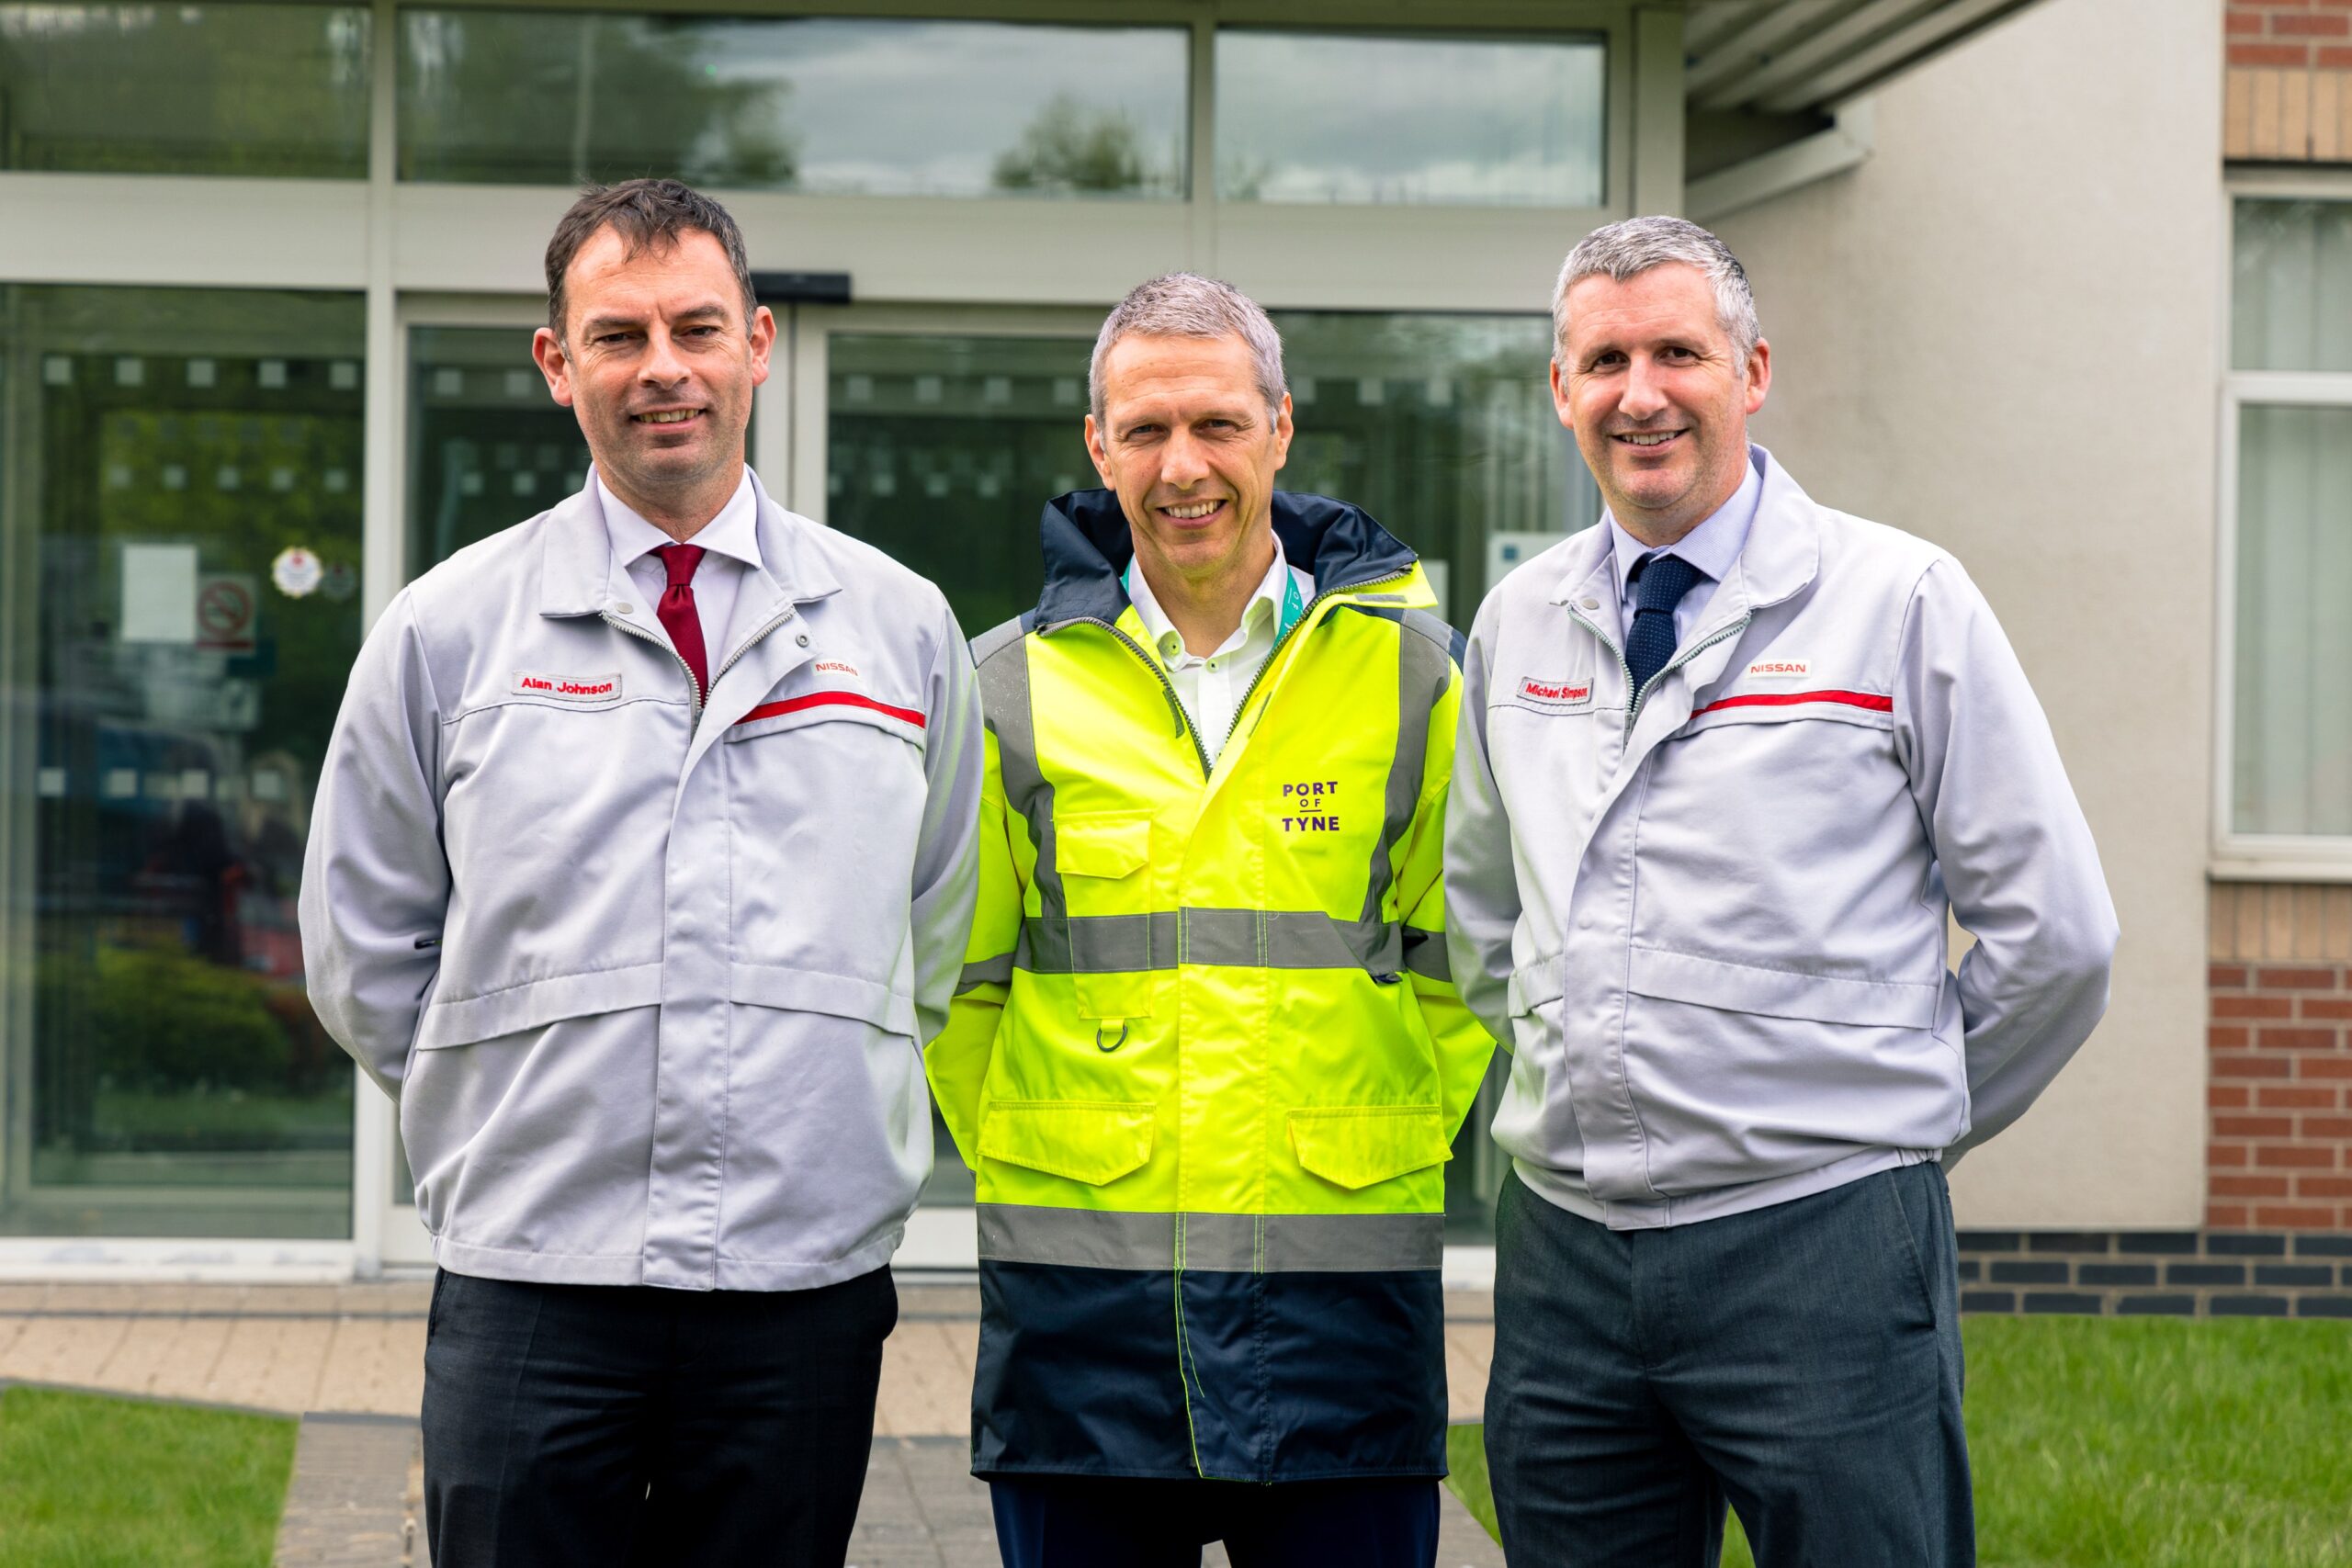 Nissan Renews Partnership with the Port of Tyne